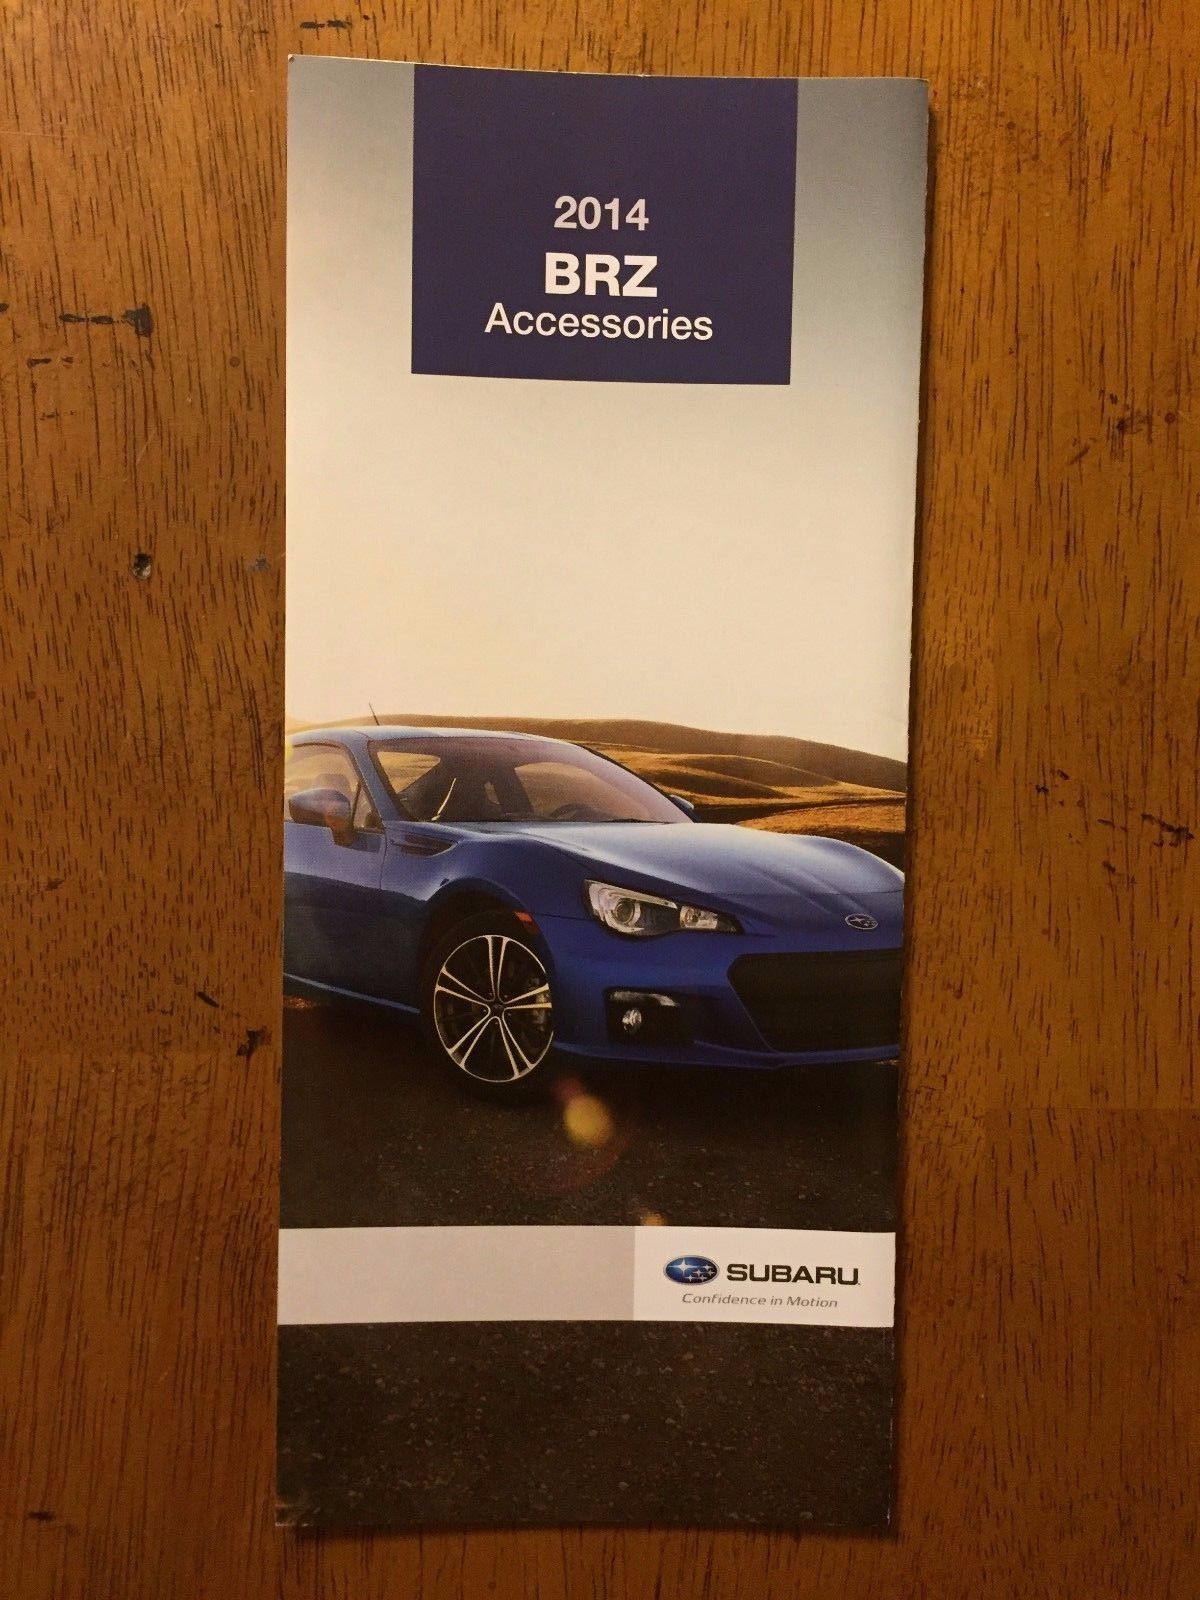 2014 Subaru BRZ accessories catalog sales brochure - $2.99